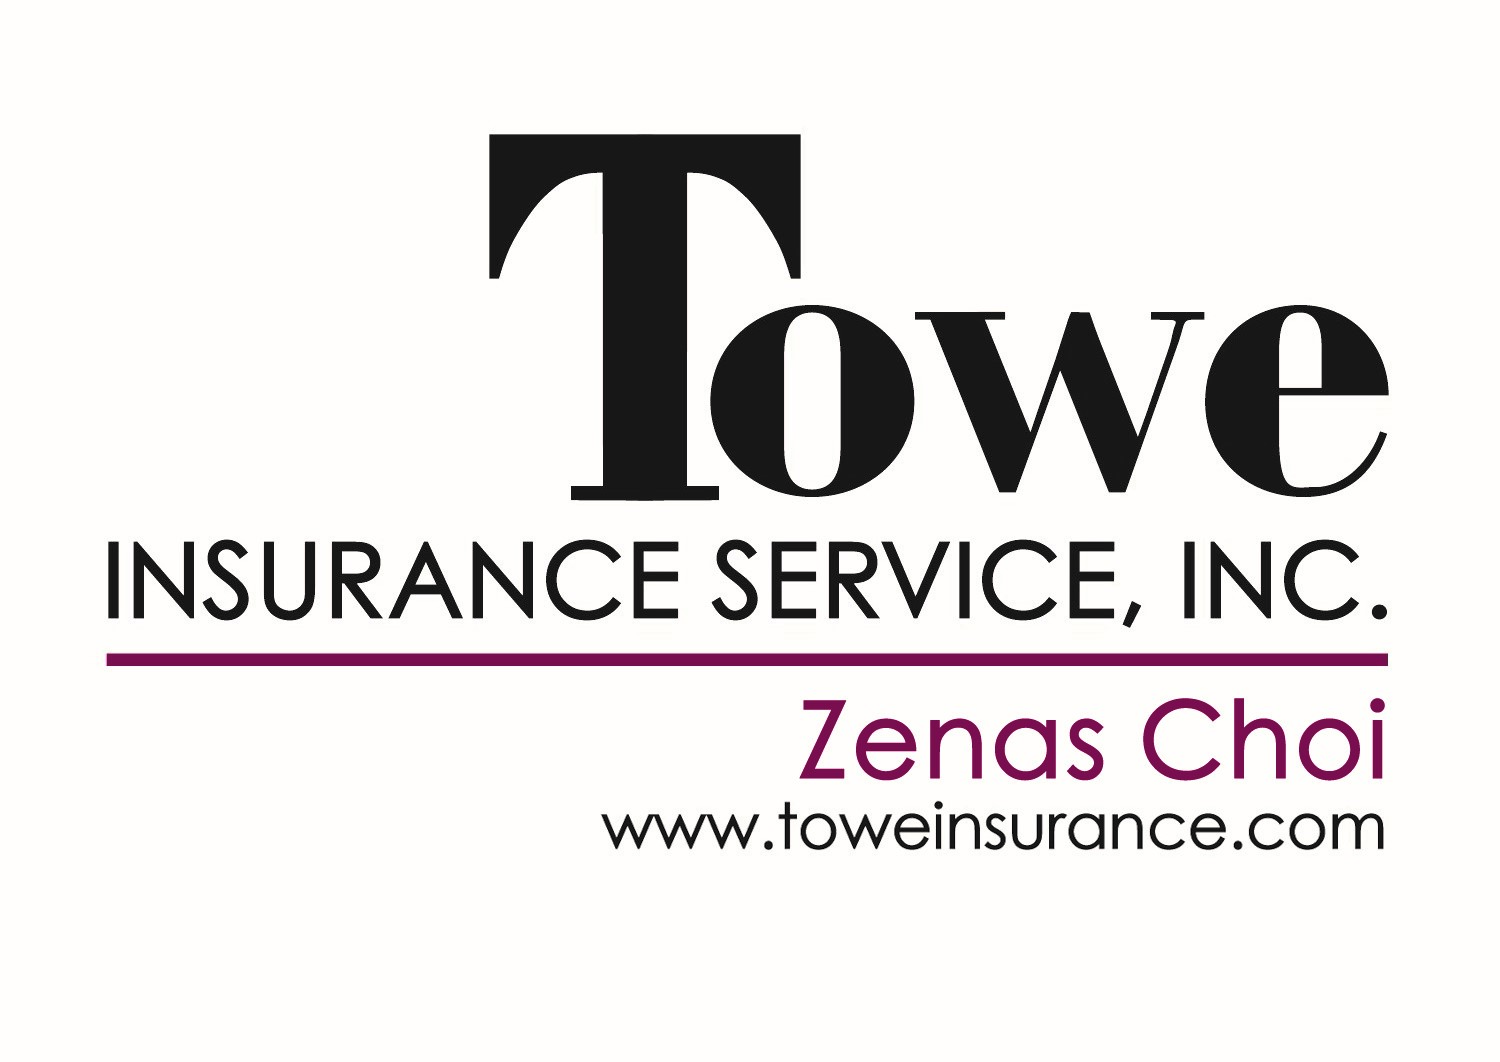 towe-insurance-service-inc-logo